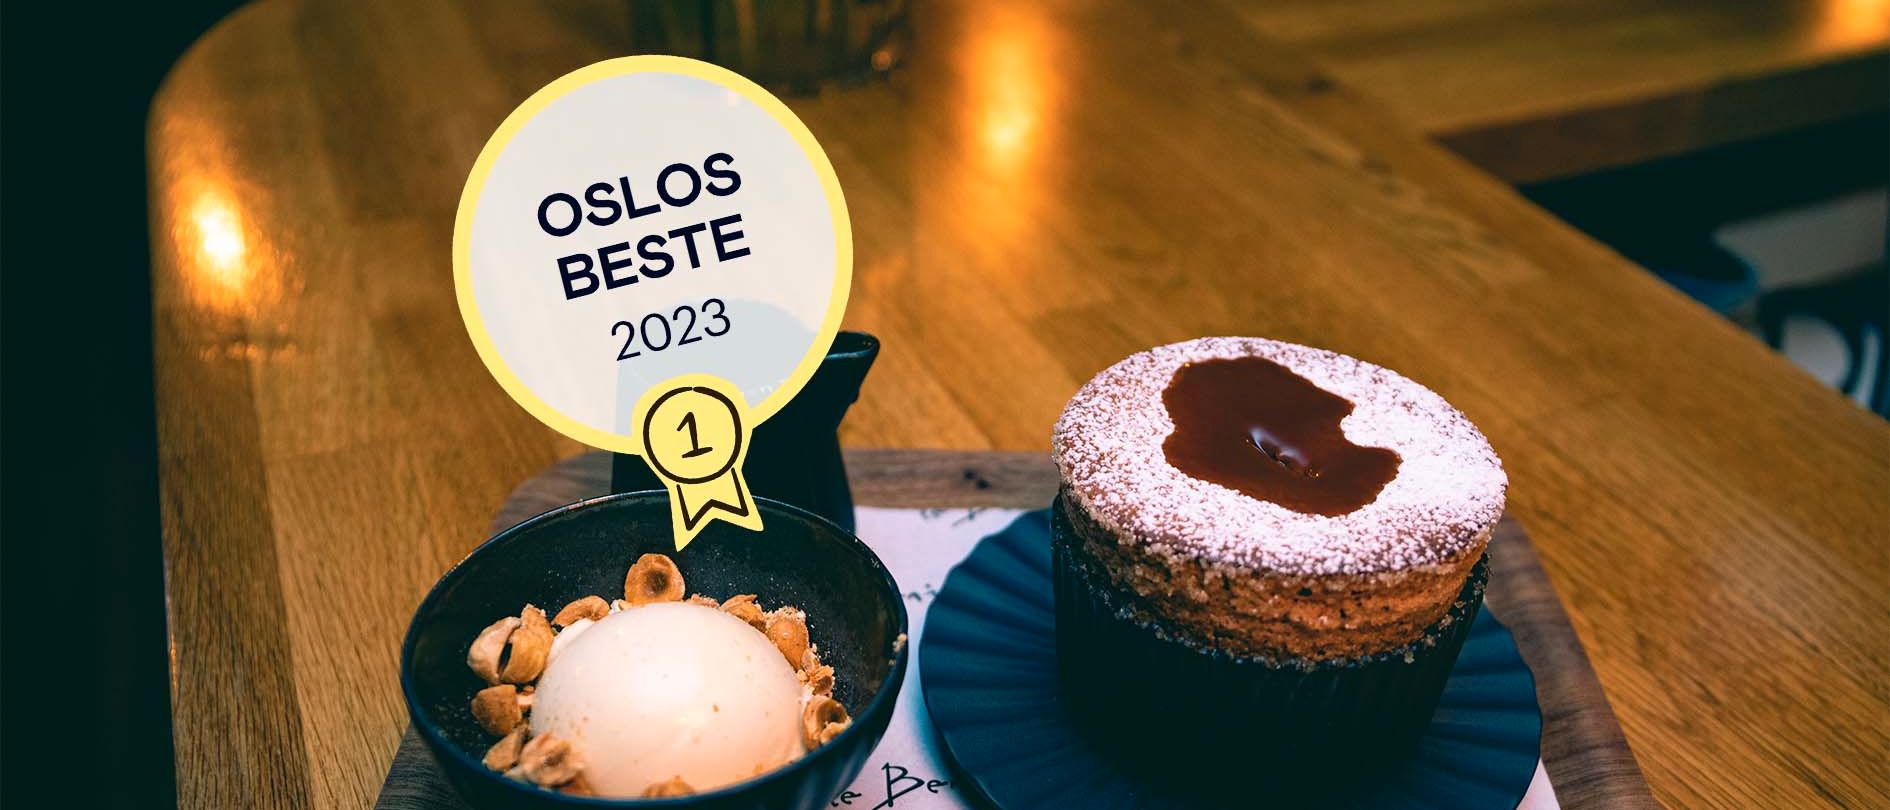 Le Benjamins erkefranske sufflé er Oslos beste dessert 